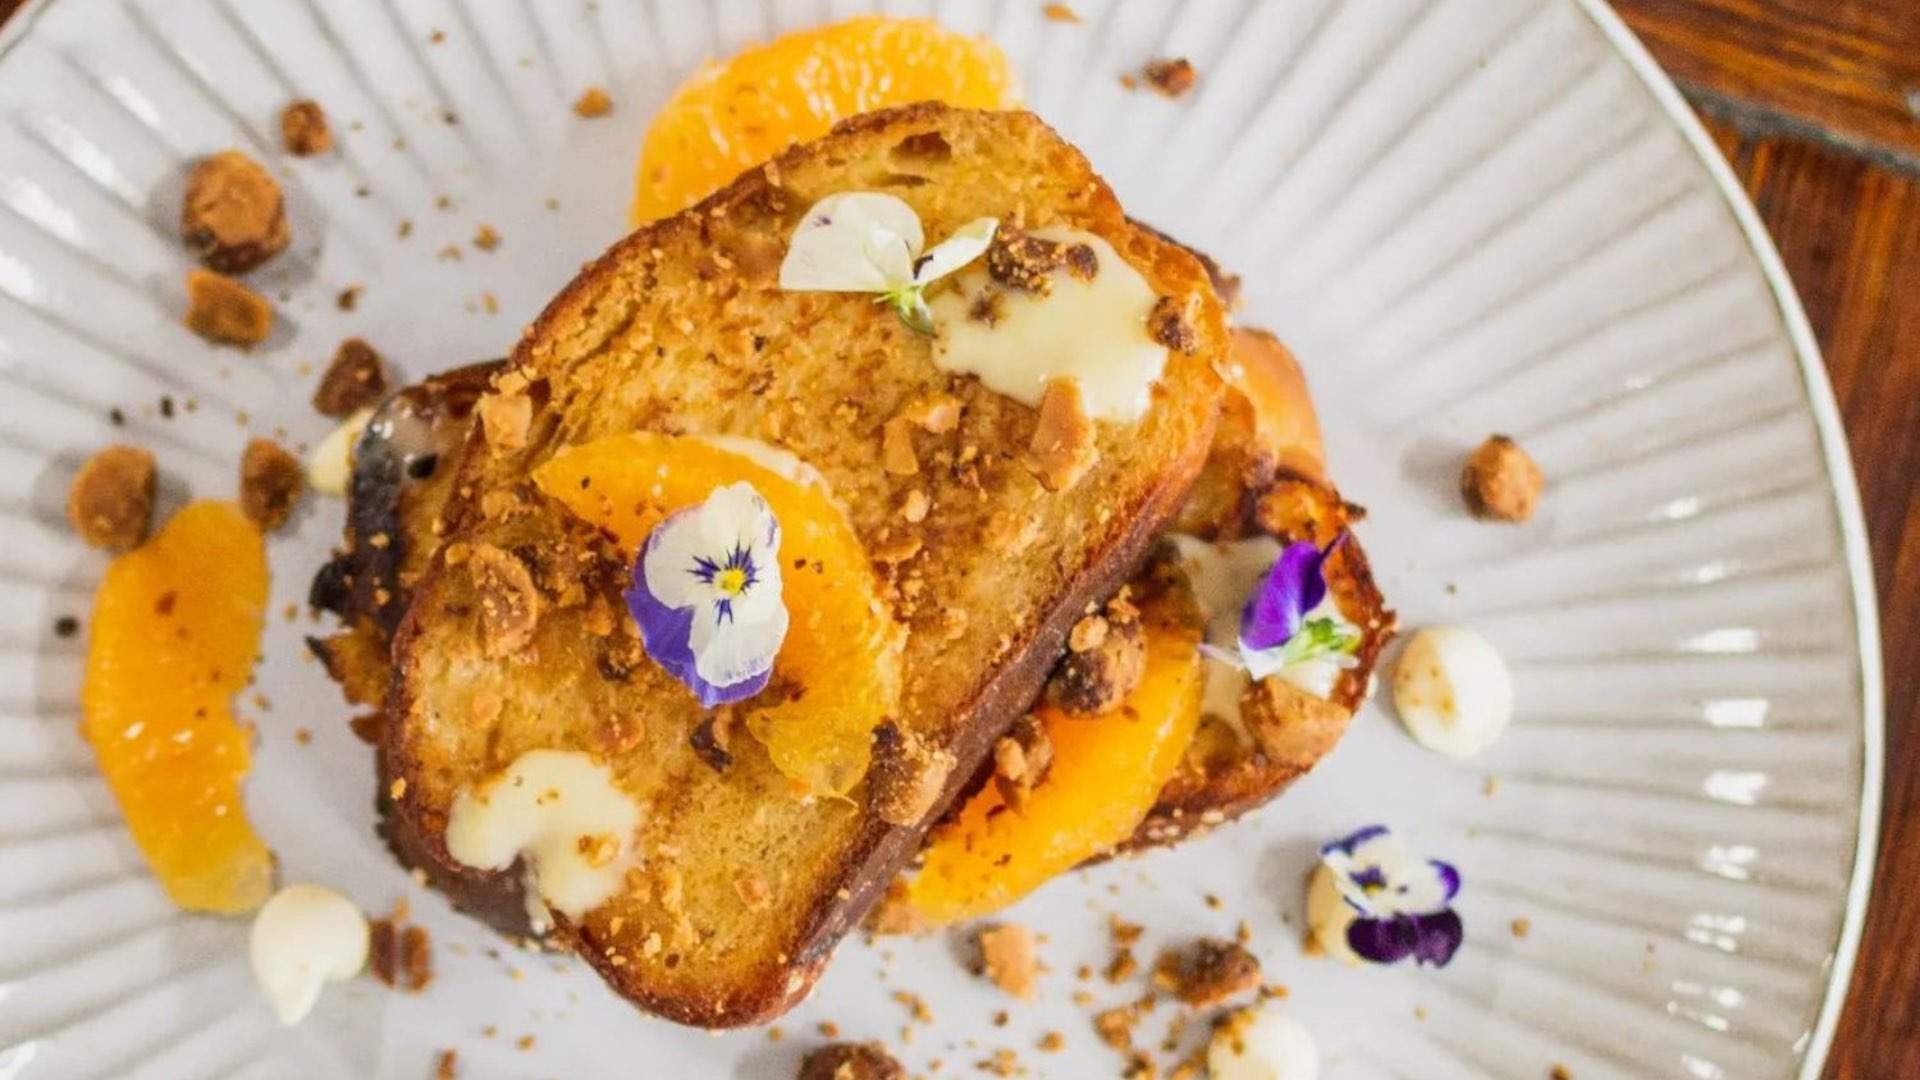 Photo of orange French toast from Havenstone restaurant.